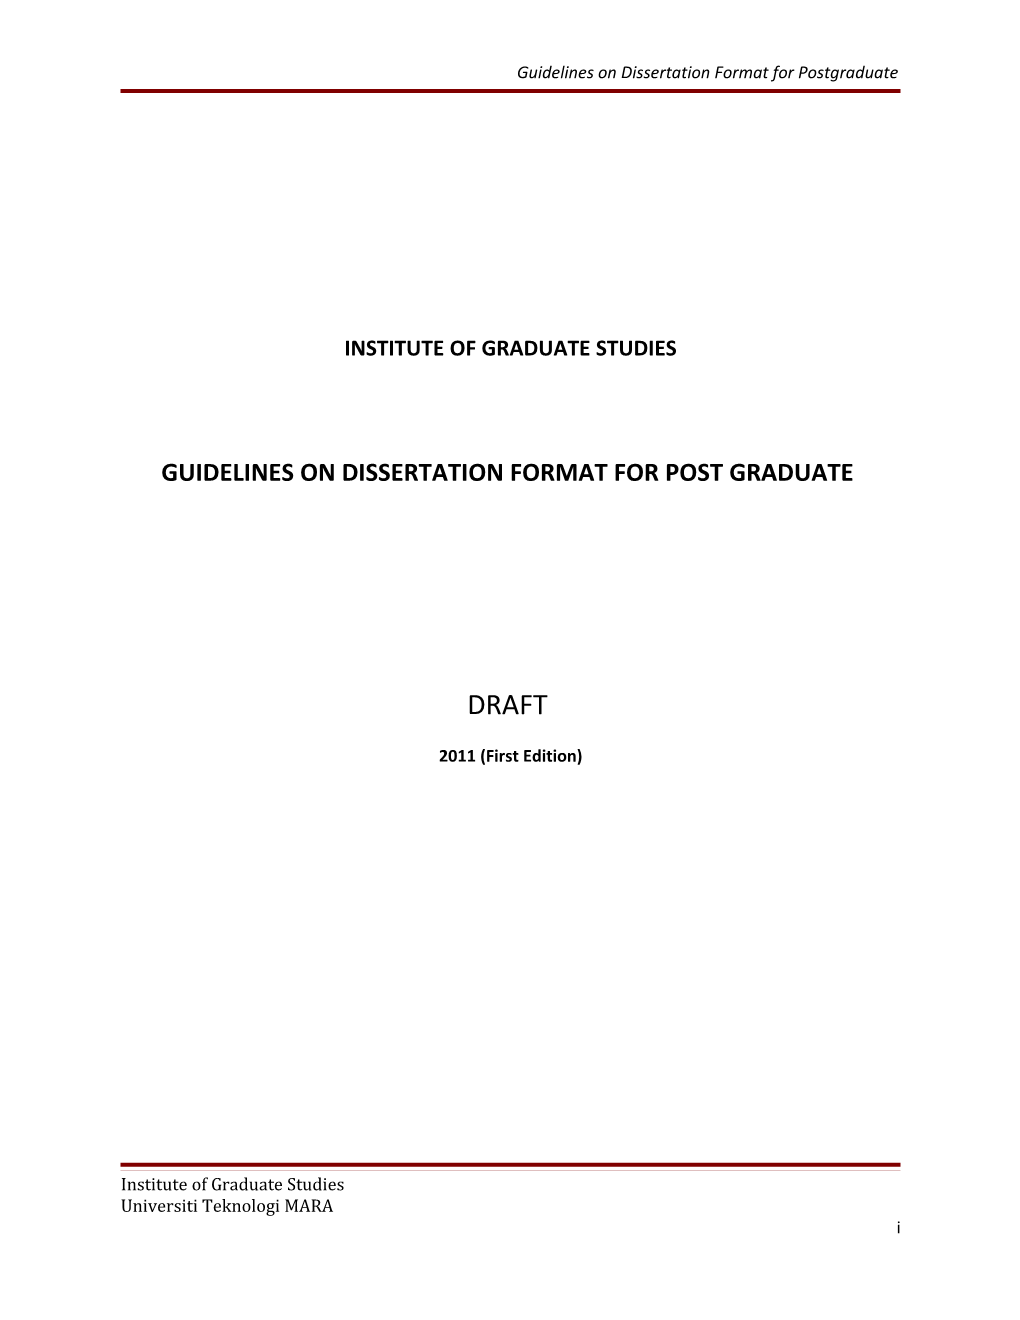 Guidelines On Dissertation Format For Postgraduate